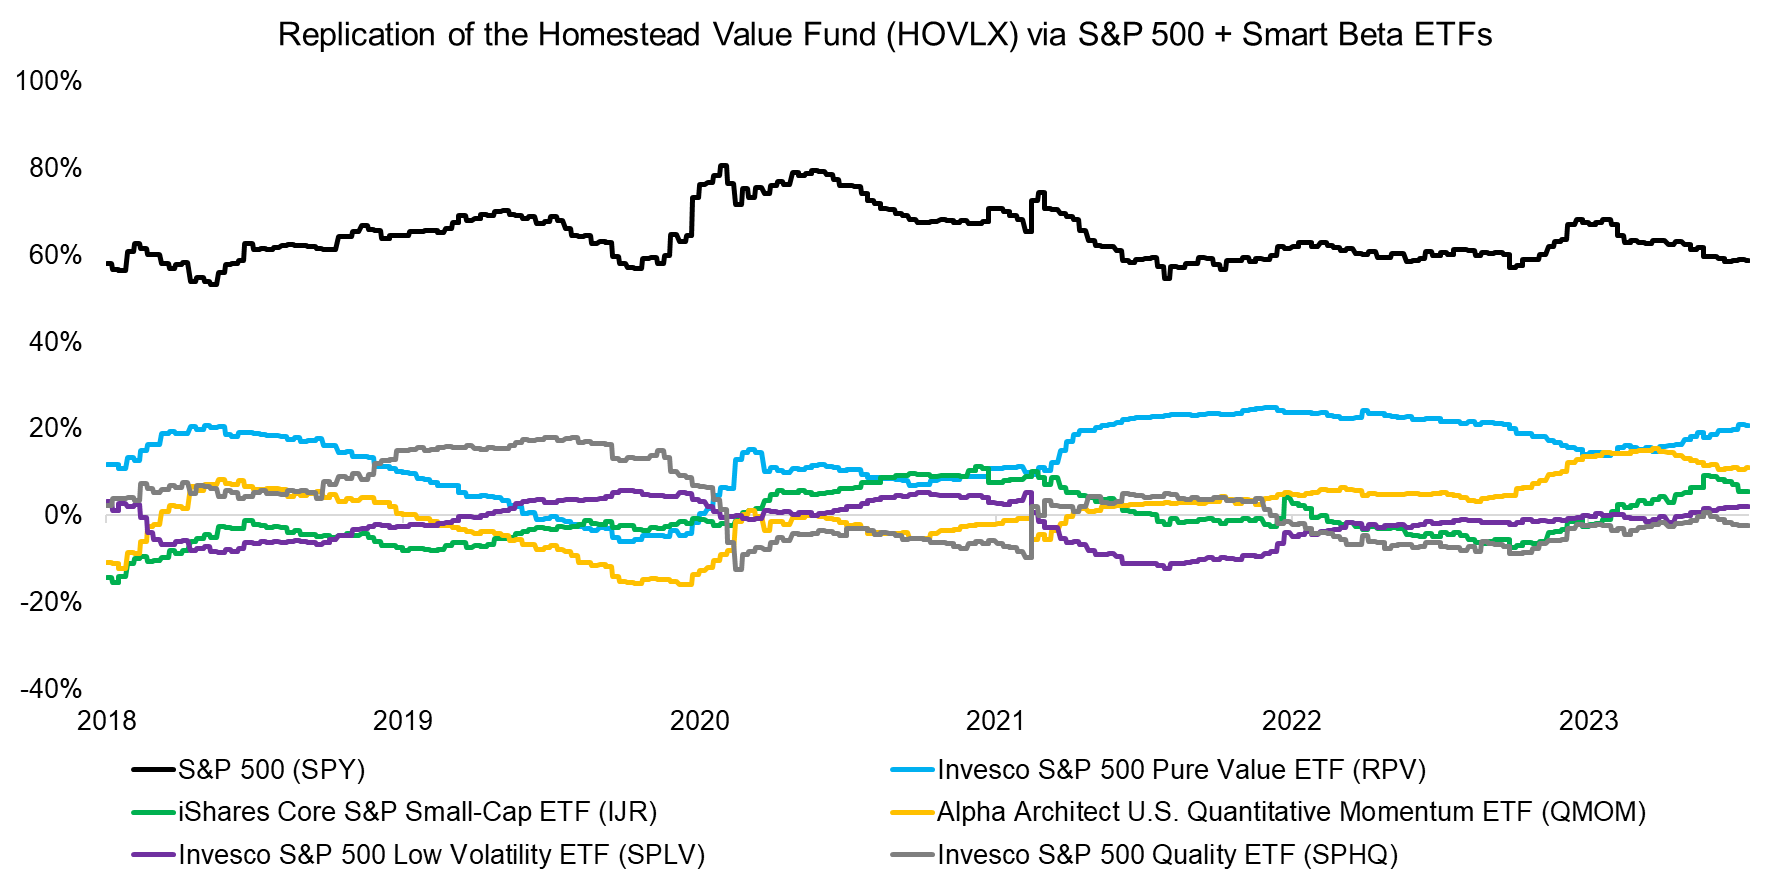 Replication of the Homestead Value Fund (HOVLX) via S&P 500 + Smart Beta ETFs